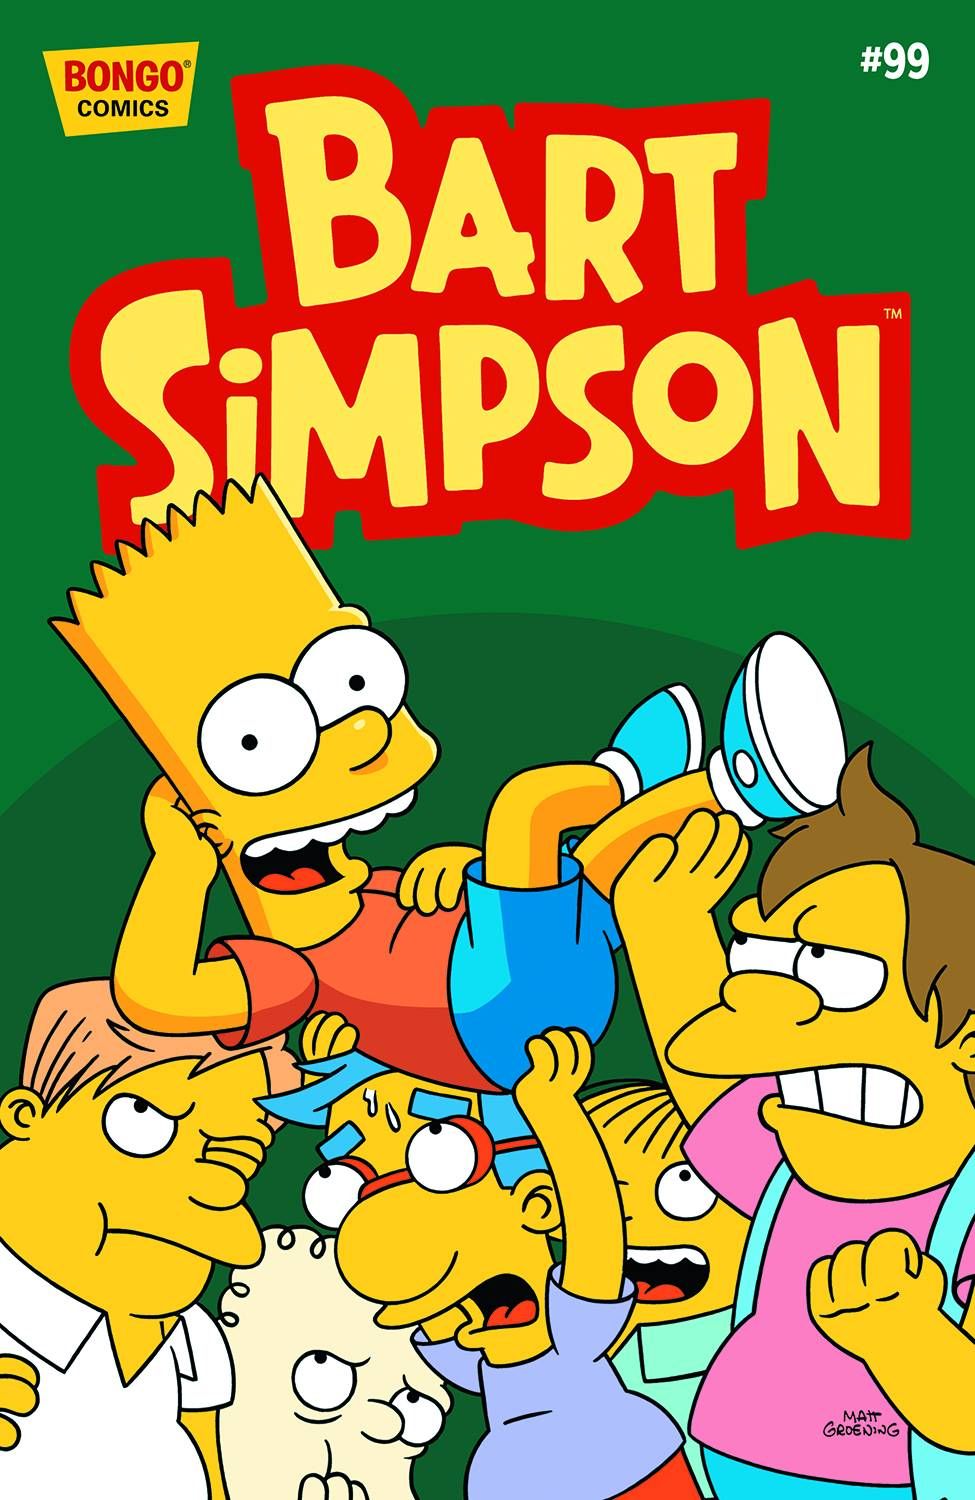 Simpsons Comics Presents Bart Simpson #99 Comic